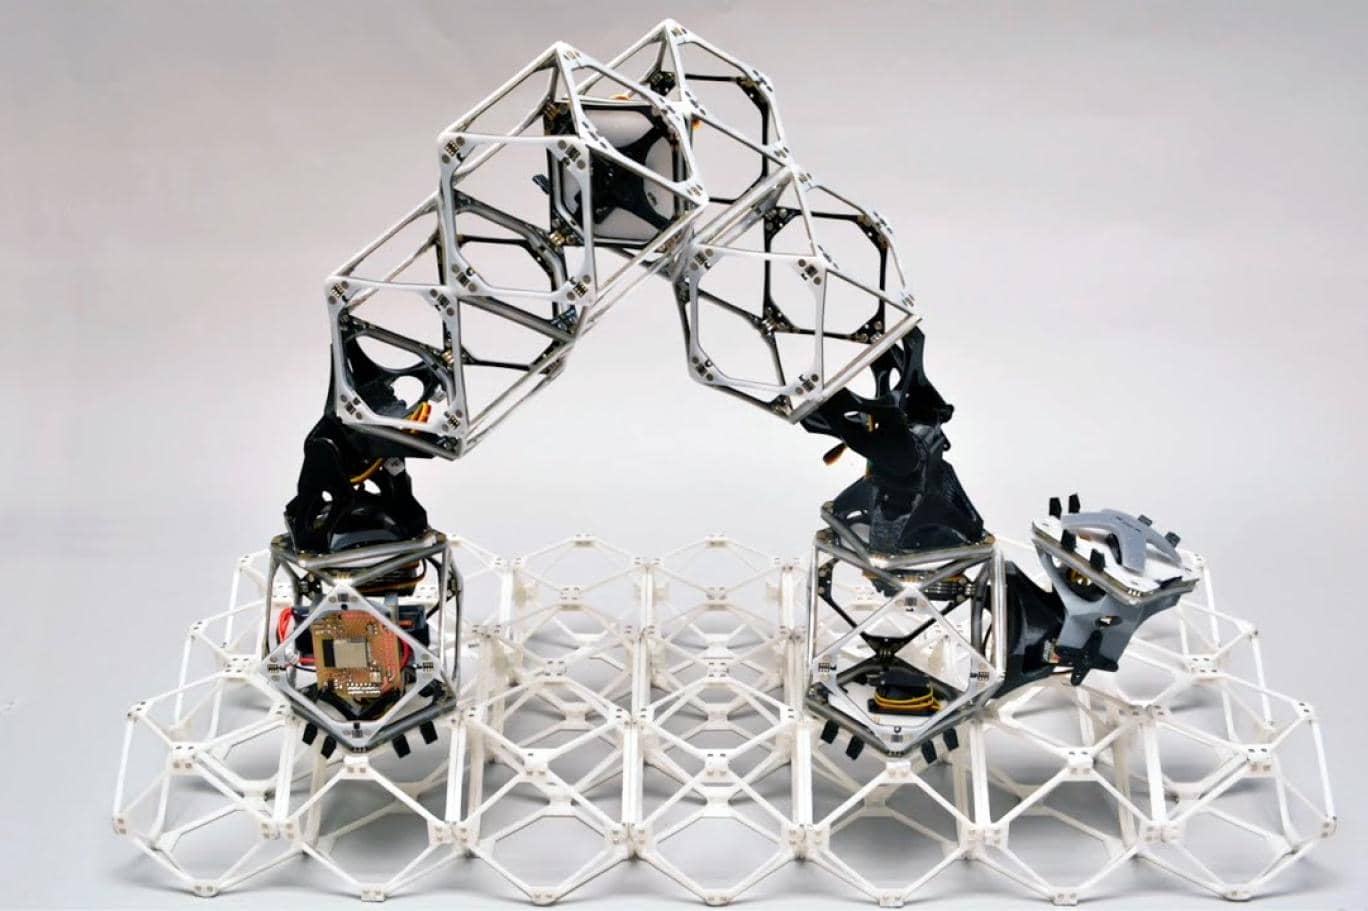 MIT'de kendini kopyalayan robot icat üretildi